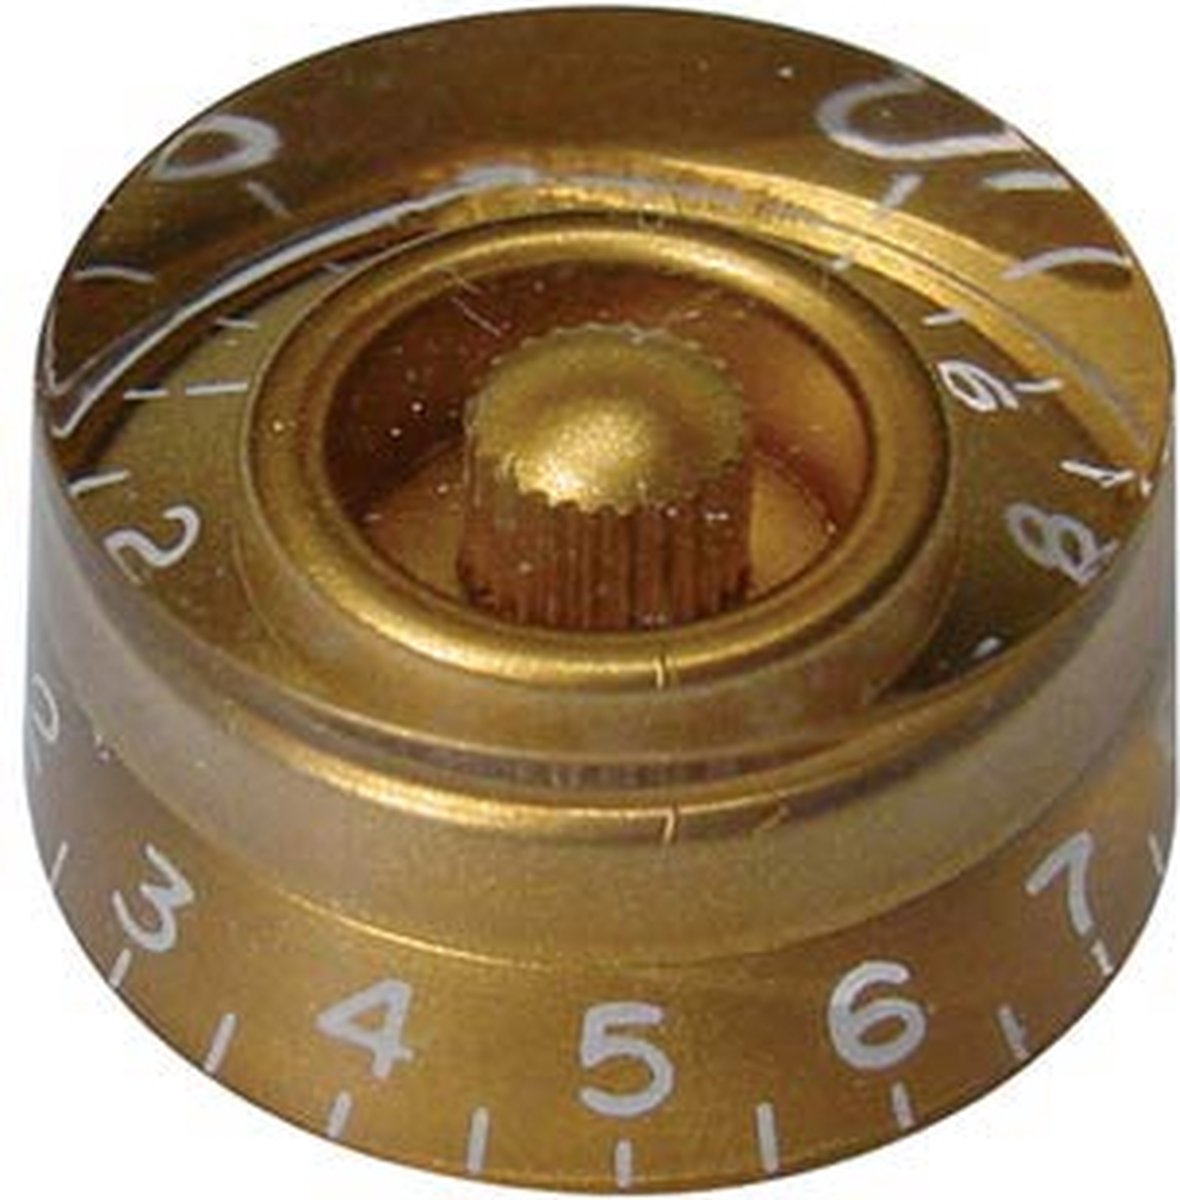 speed knob (hatbox), transparent gold